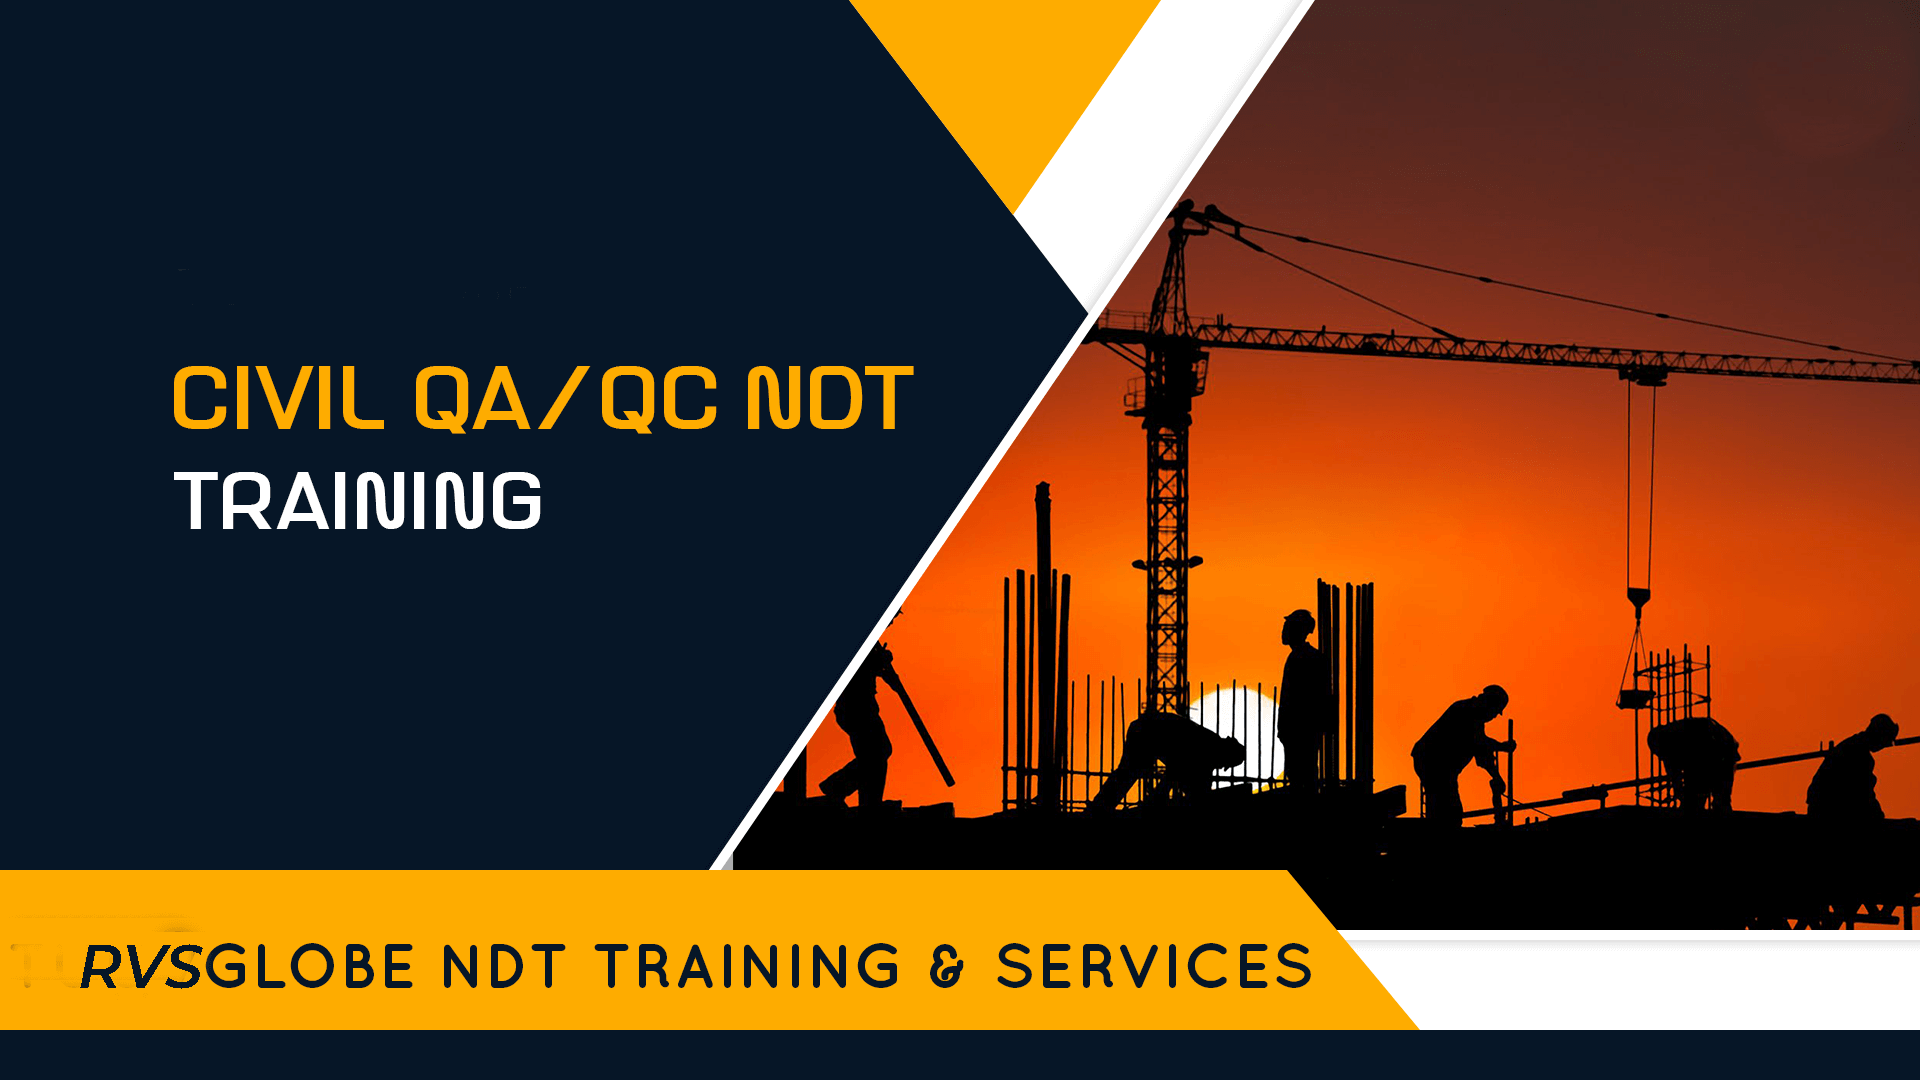 Civil QA/QC NDT Training